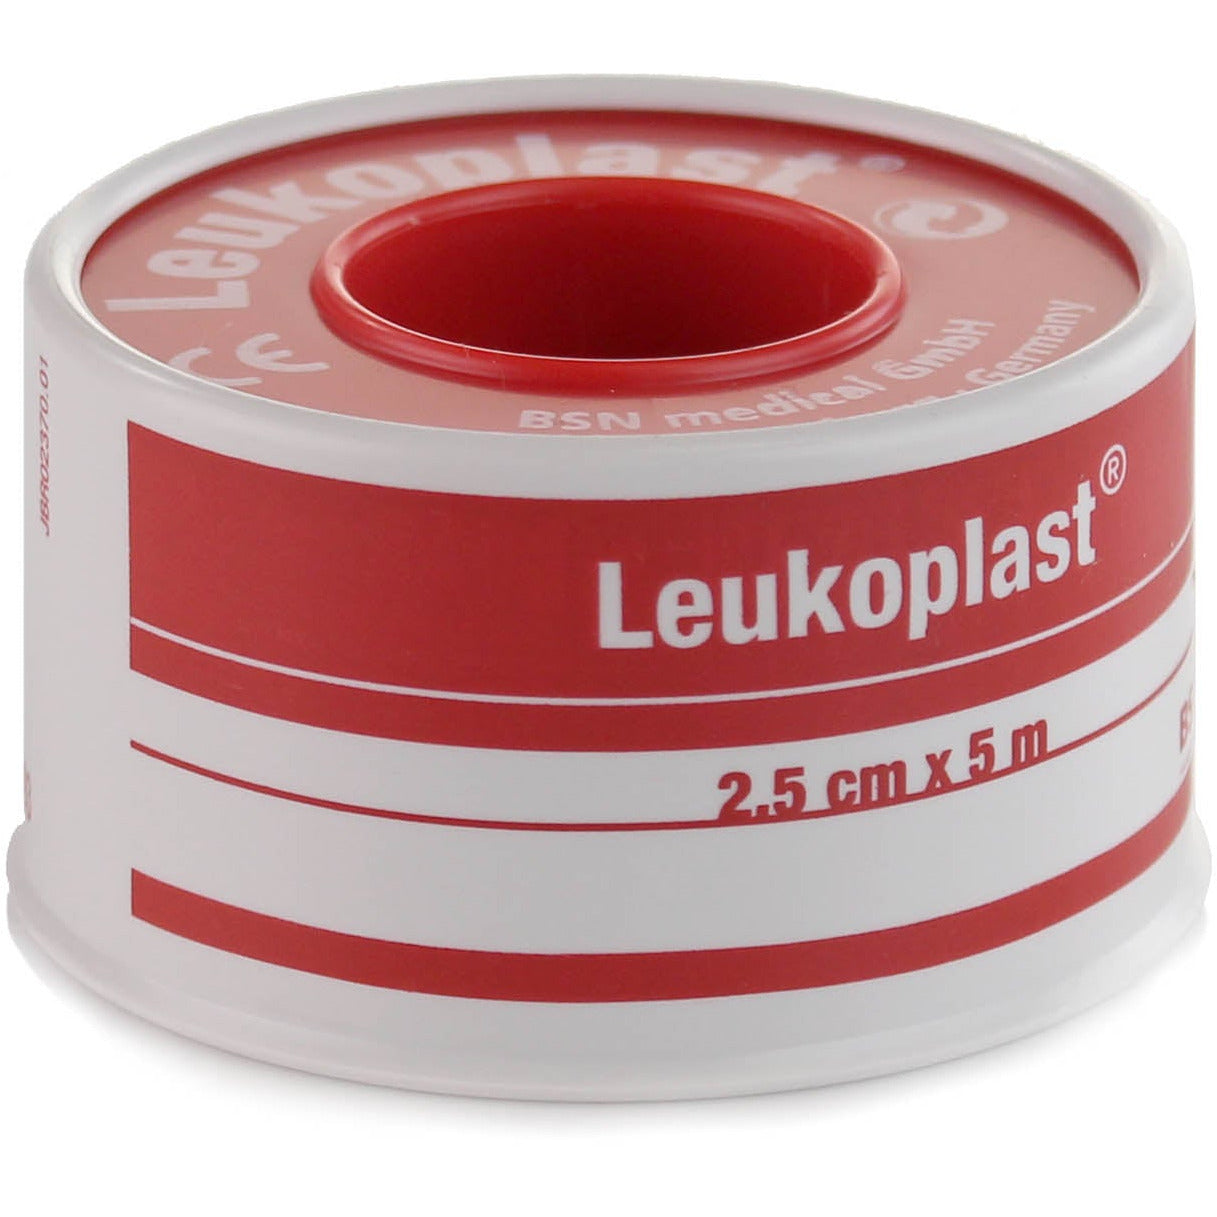 Leukoplast® 2.5cm x 5m Zinc Oxide Adhesive Tape per Roll